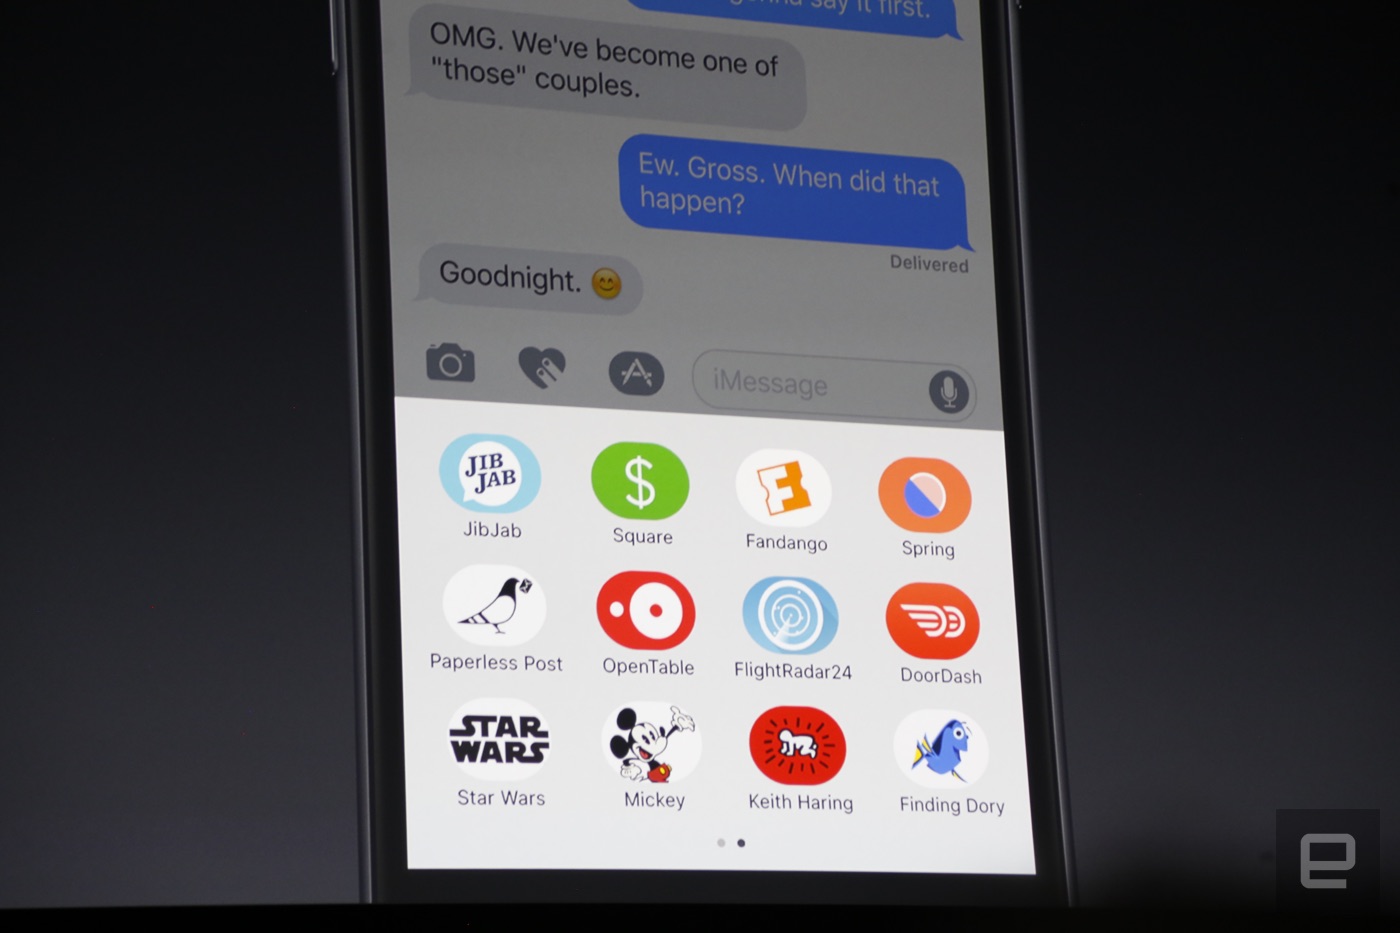 iOS 10 официально анонсирована